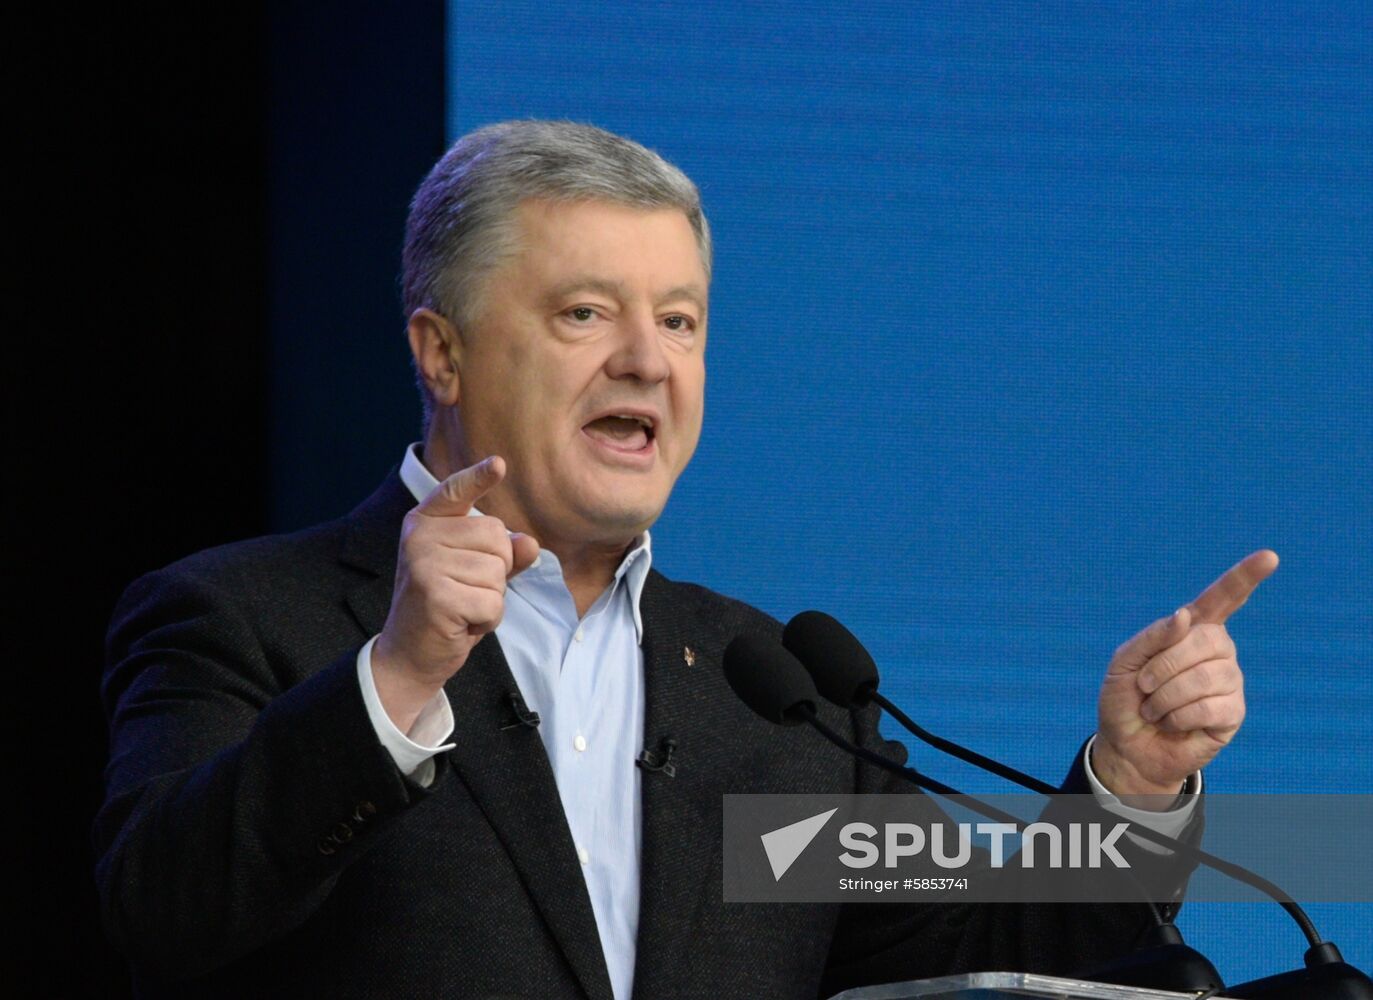 Ukraine Presidential Elections Debates